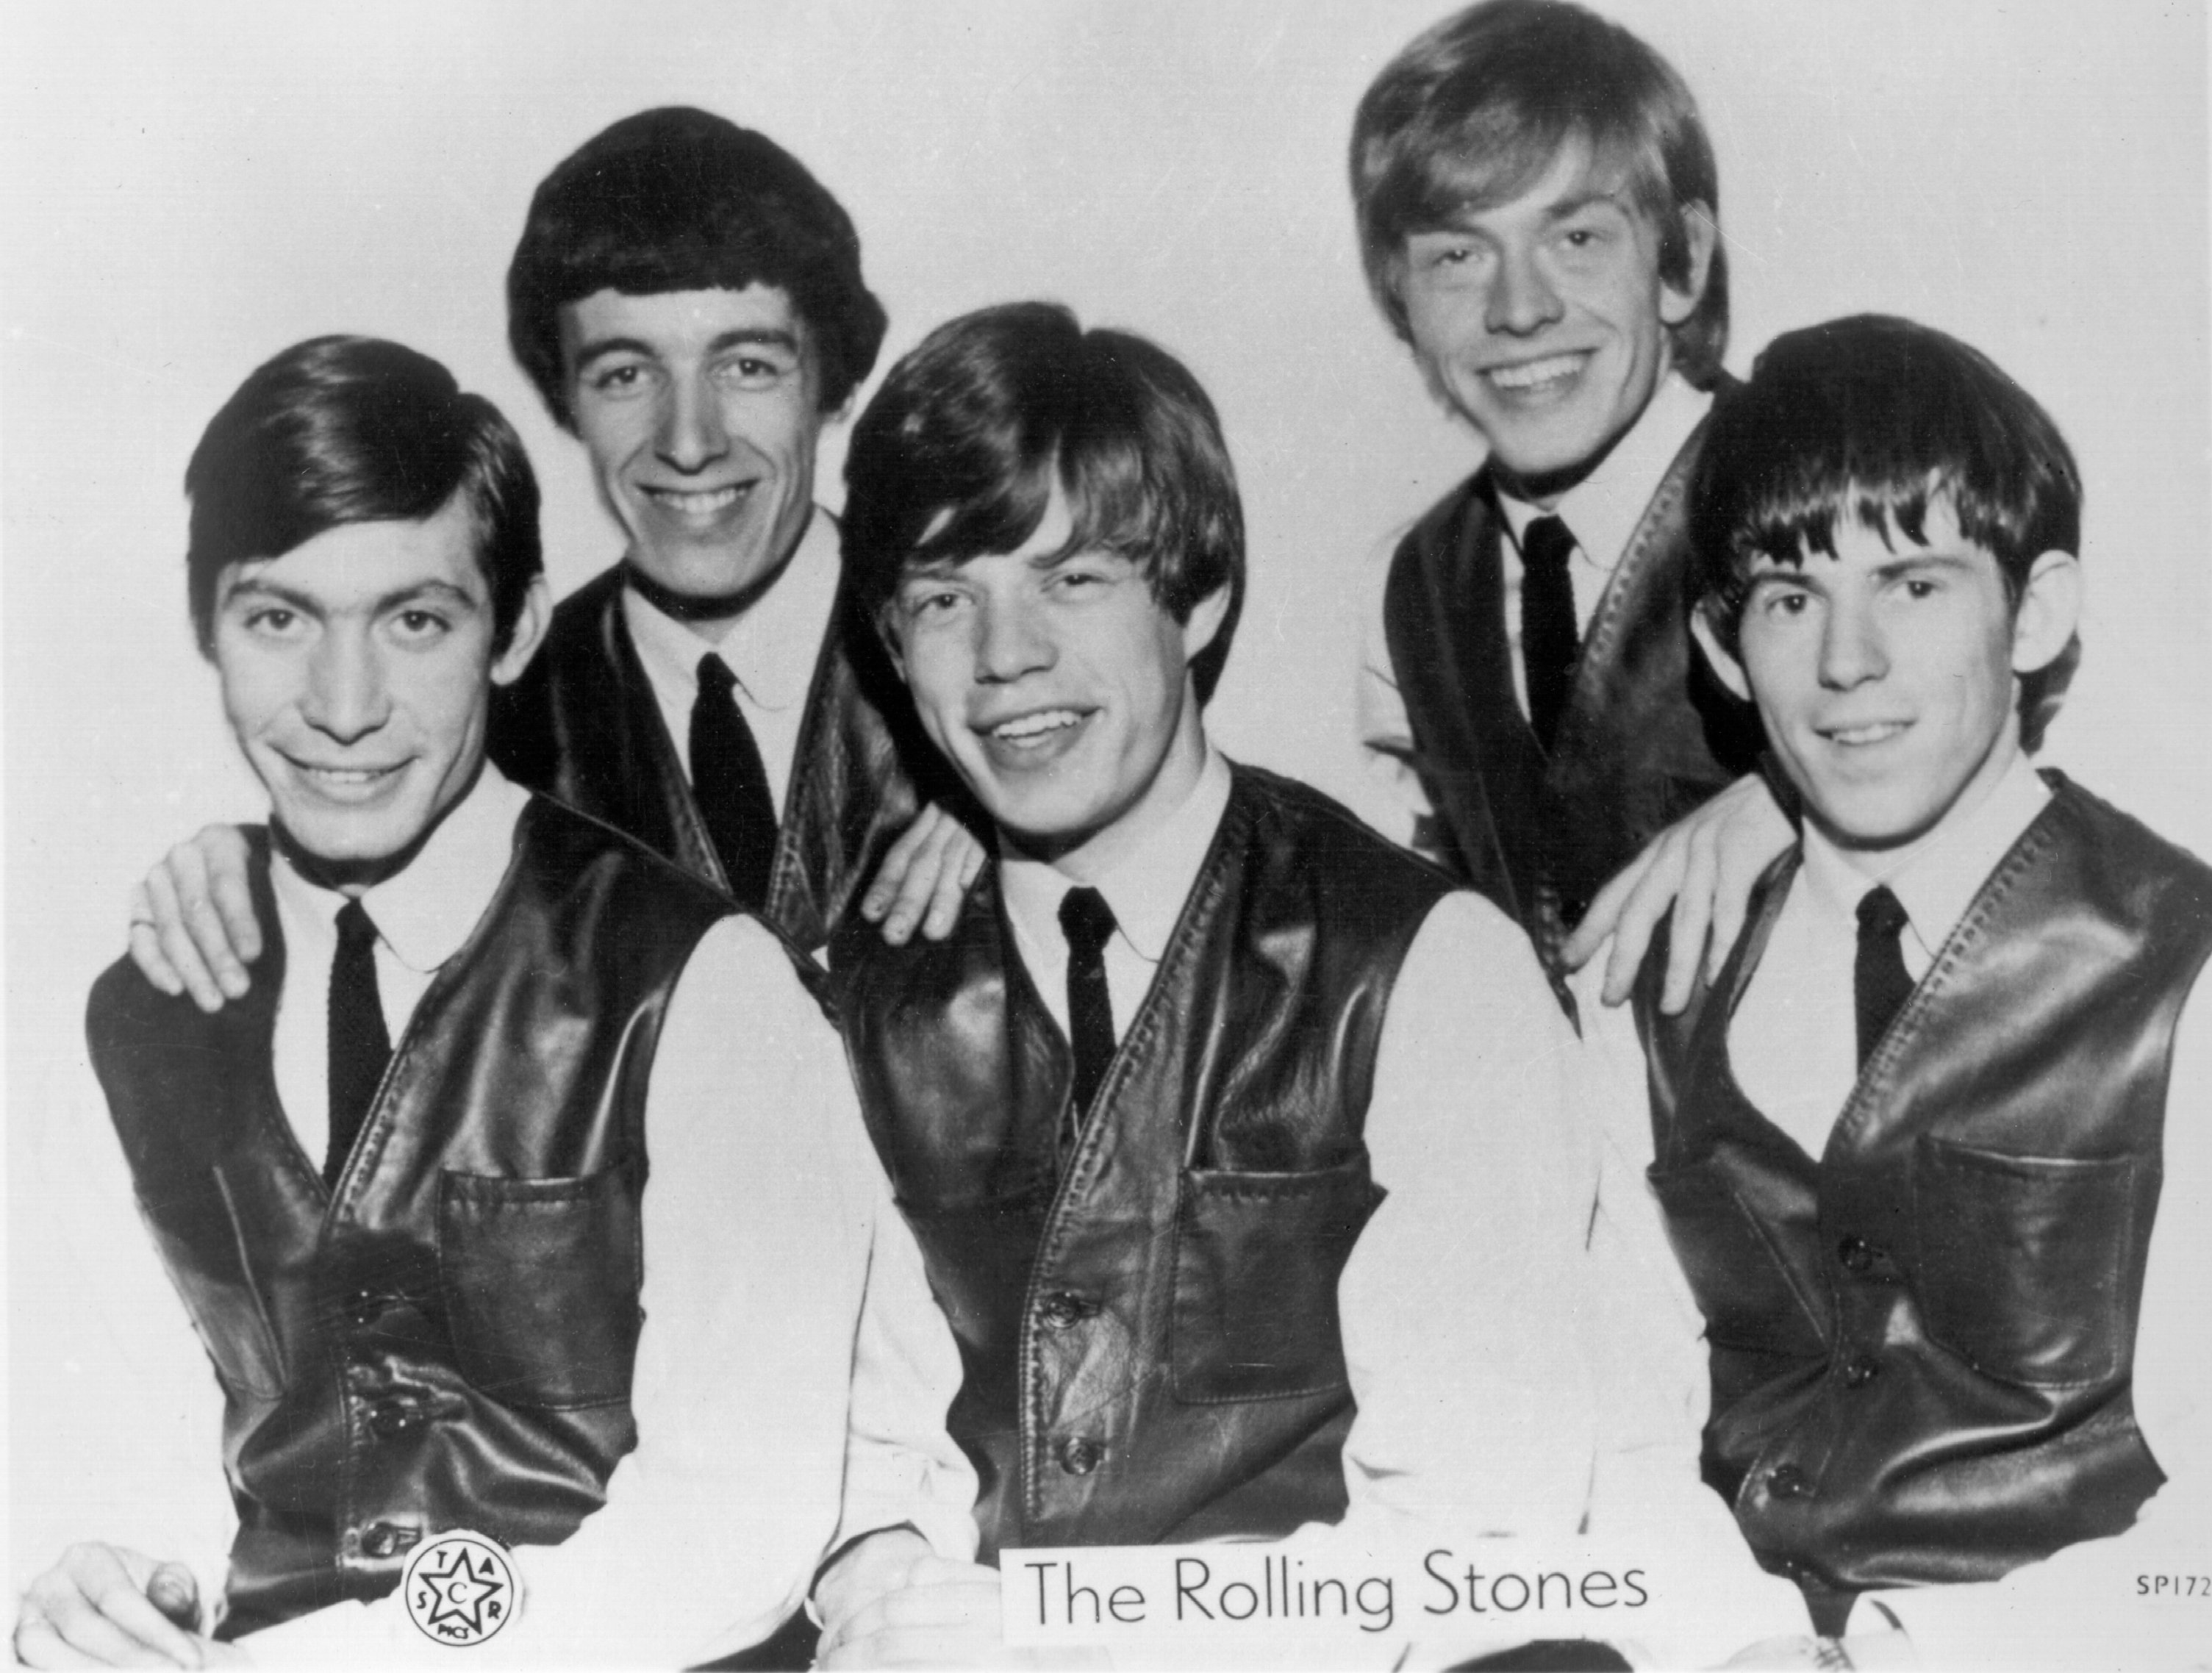 The Rolling Stones wearing ties